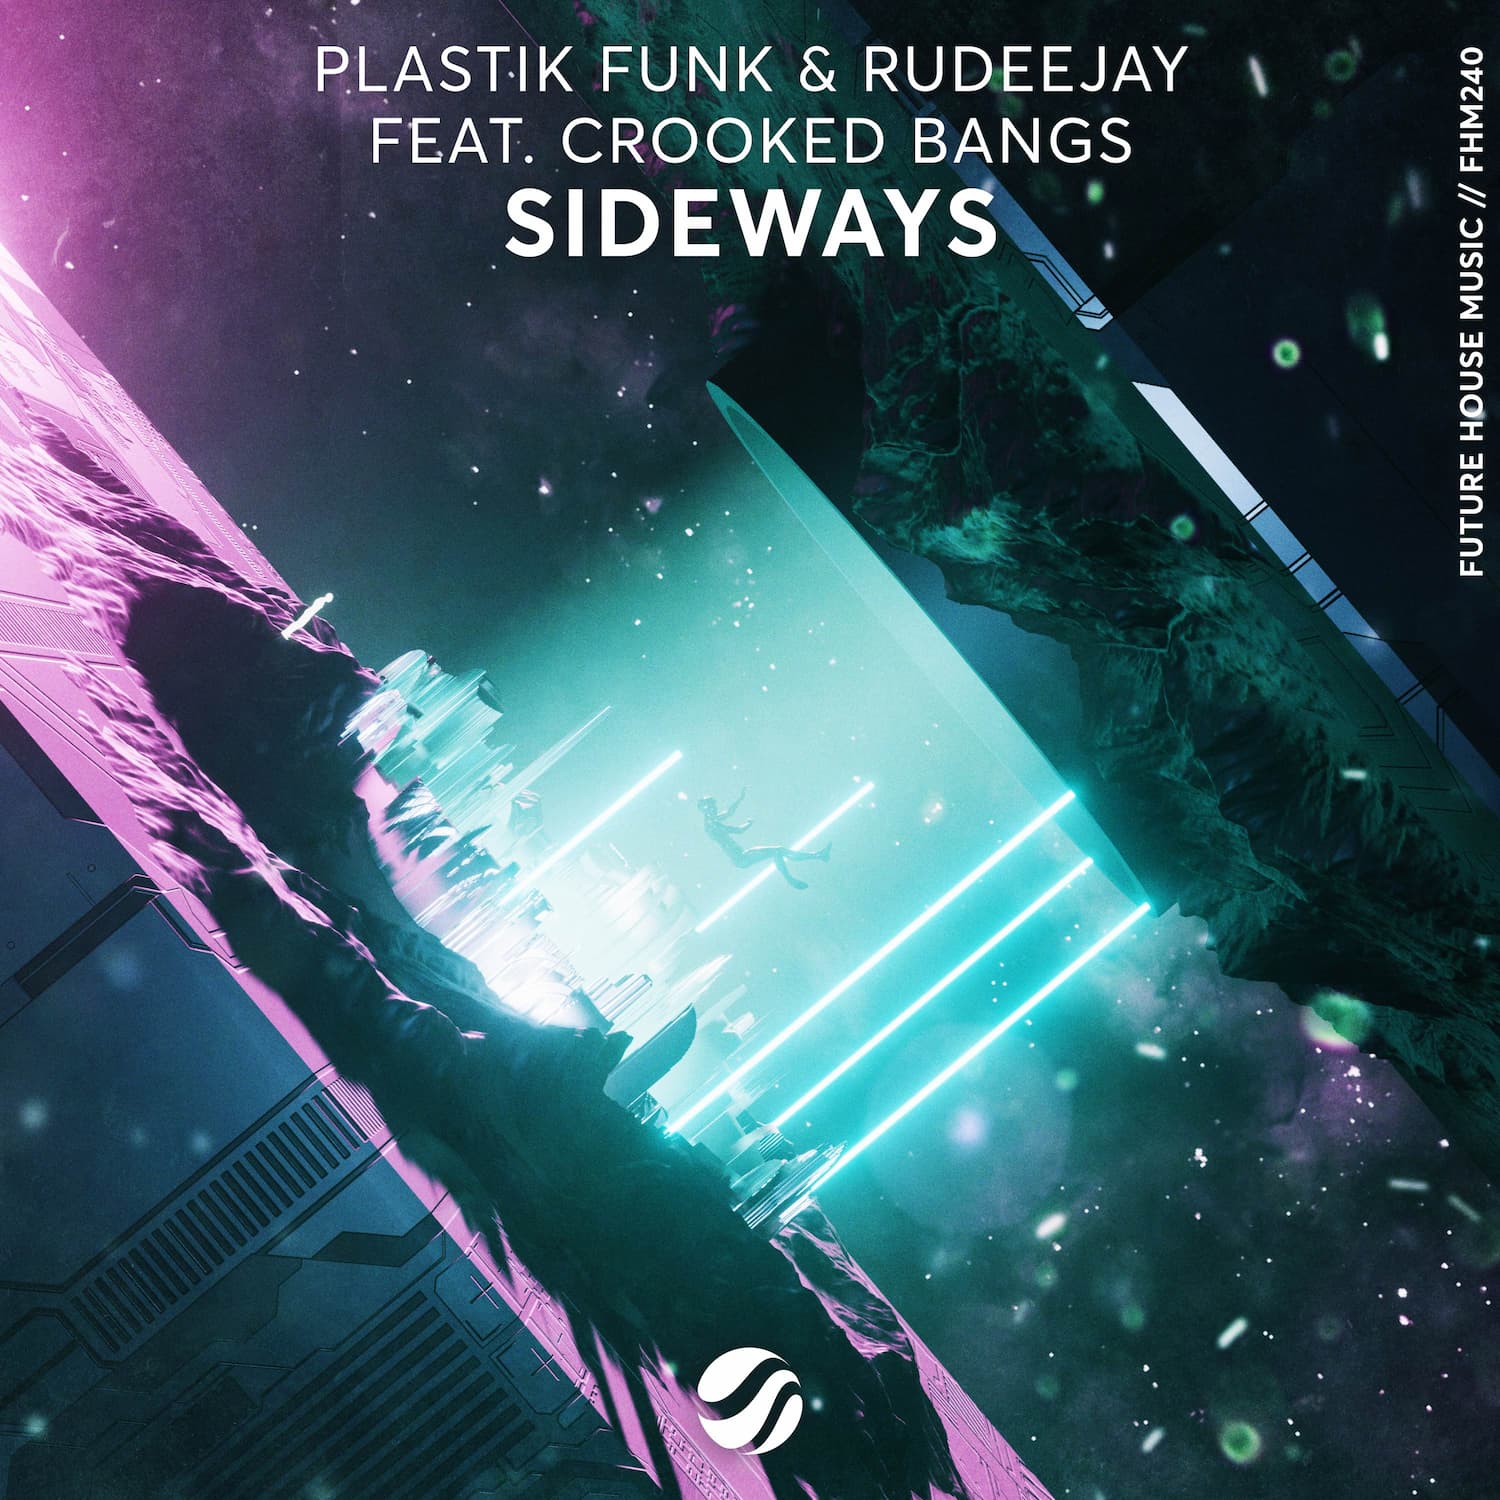 Plastik Funk, Rudeejay e Crooked Bangs apresentam "Sideways"